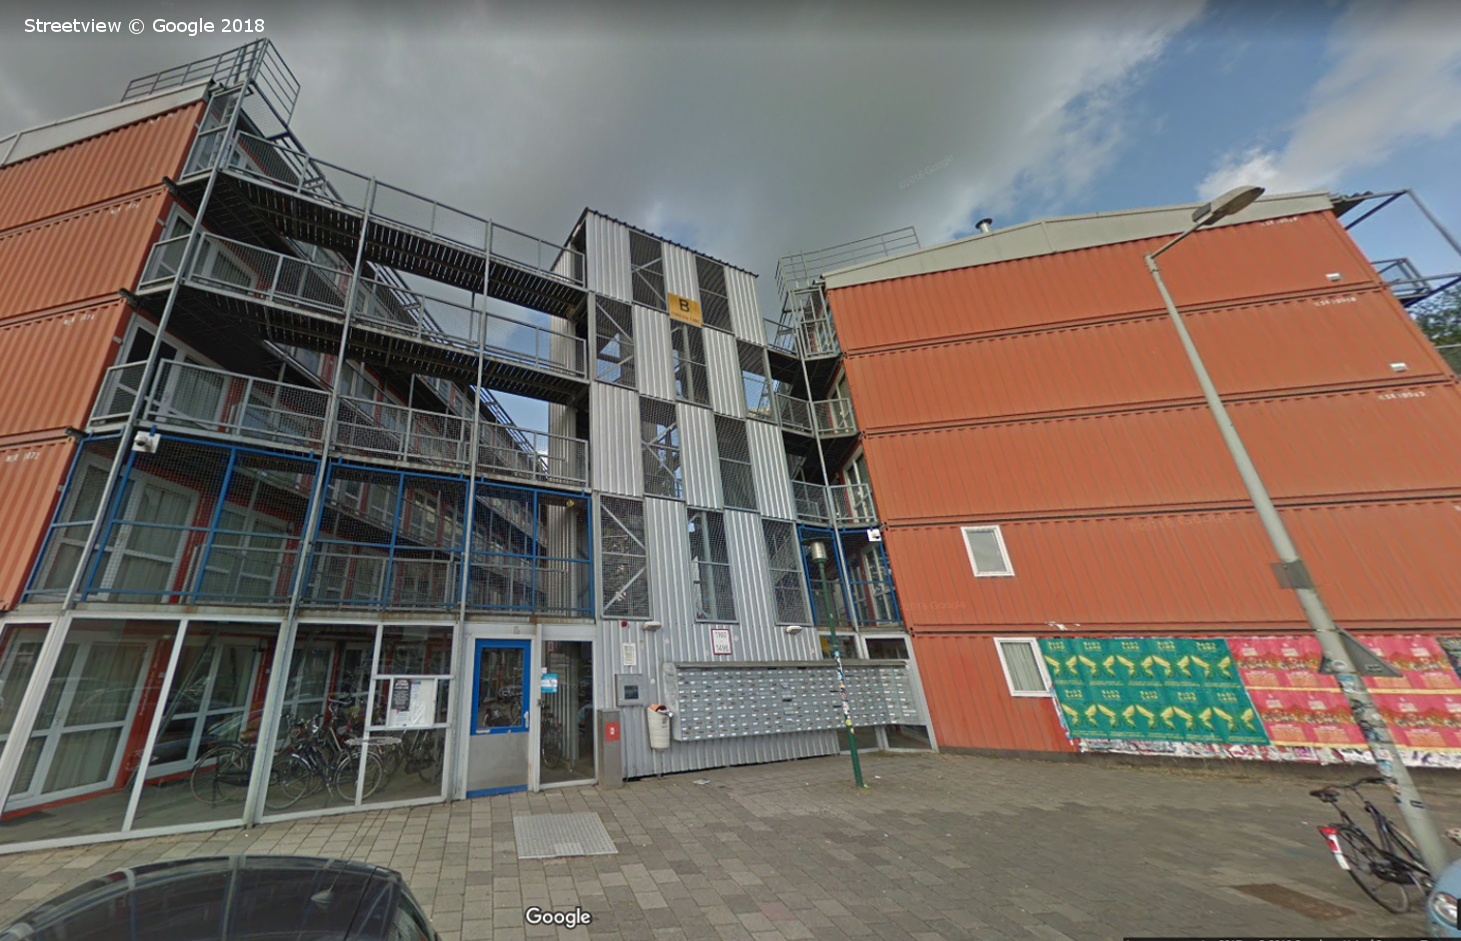 Keetwonen Student Apartments, Amsterdam, Google Streetview